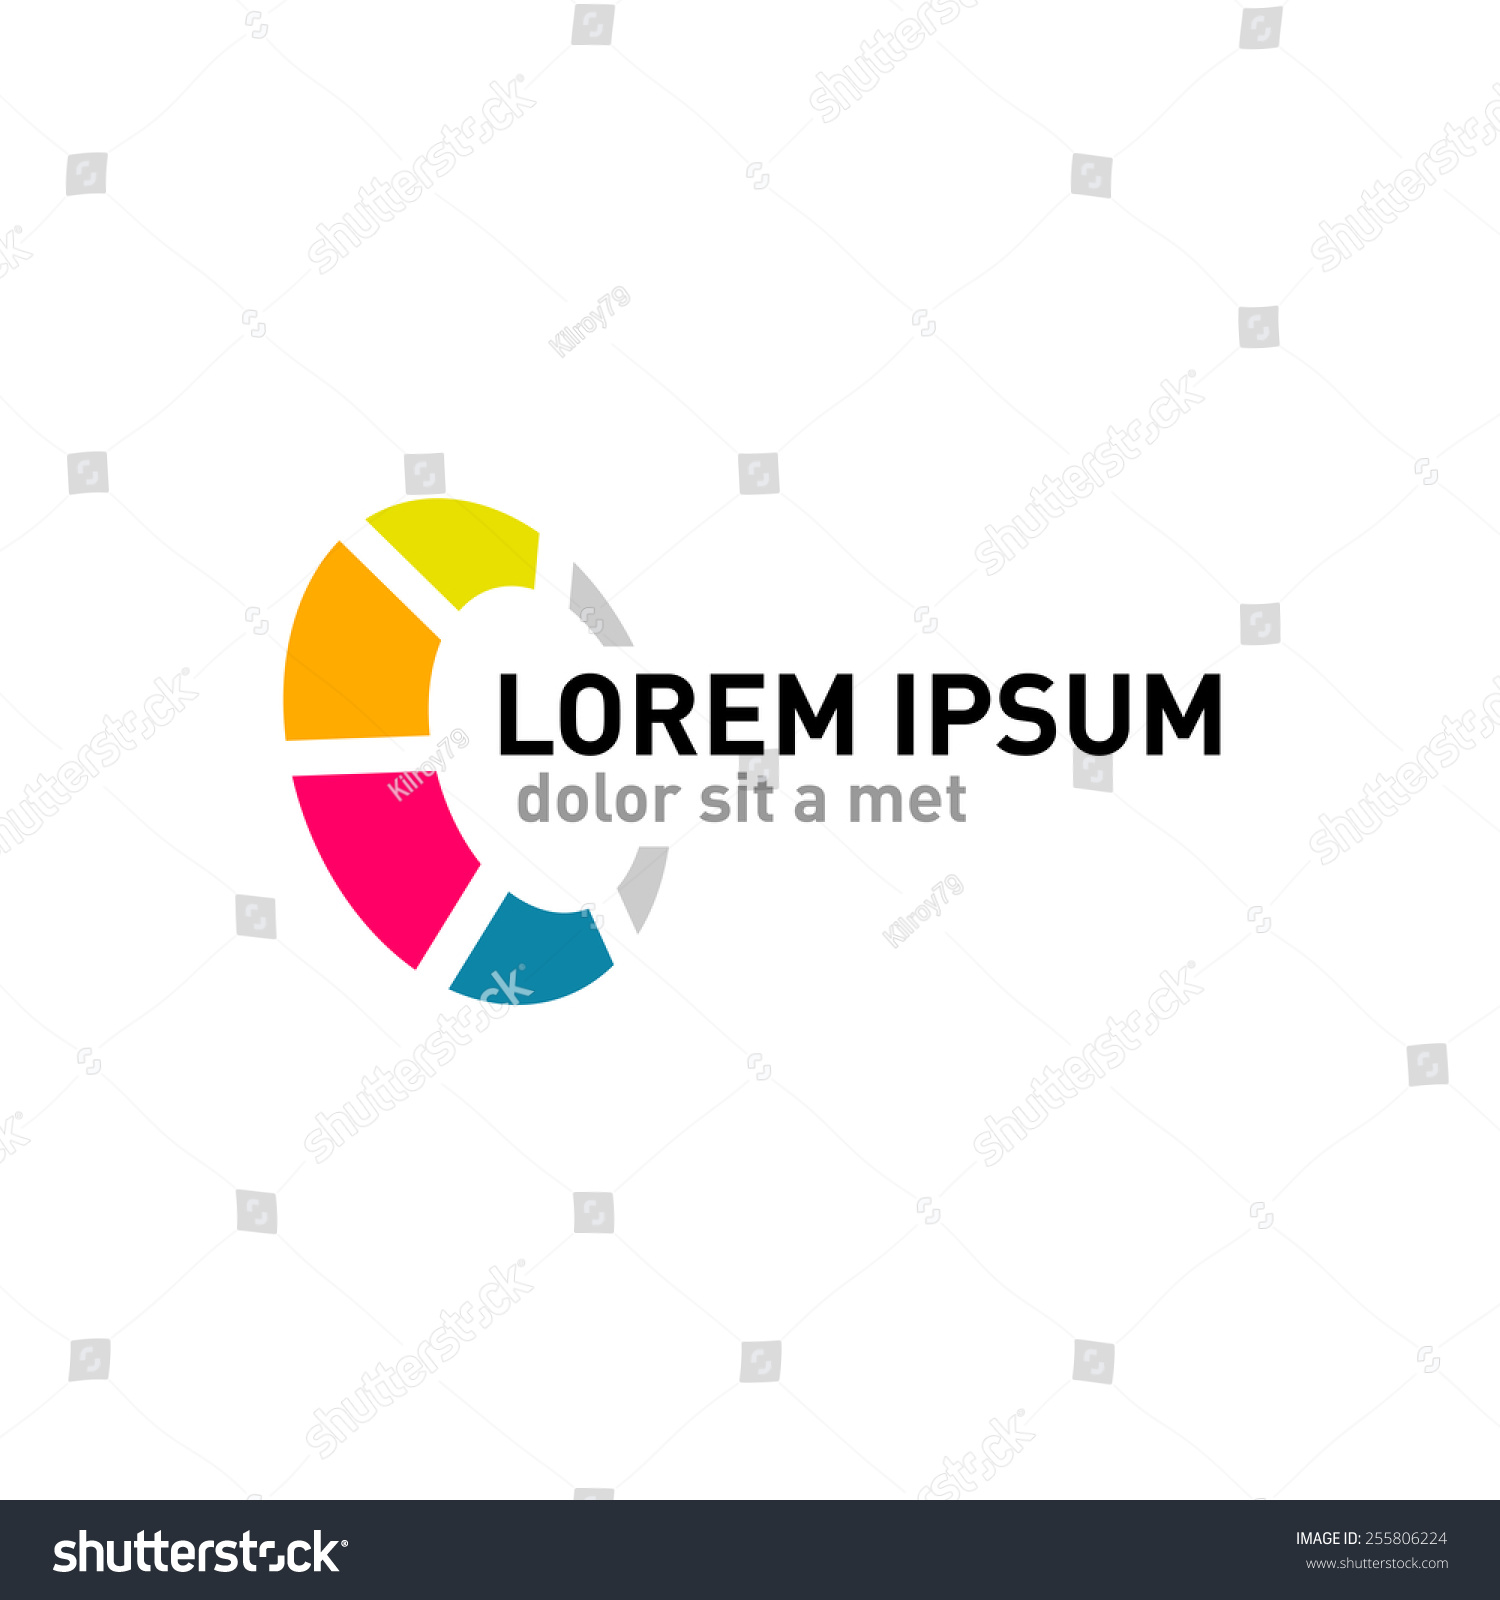 Toko Lorem Ipsum